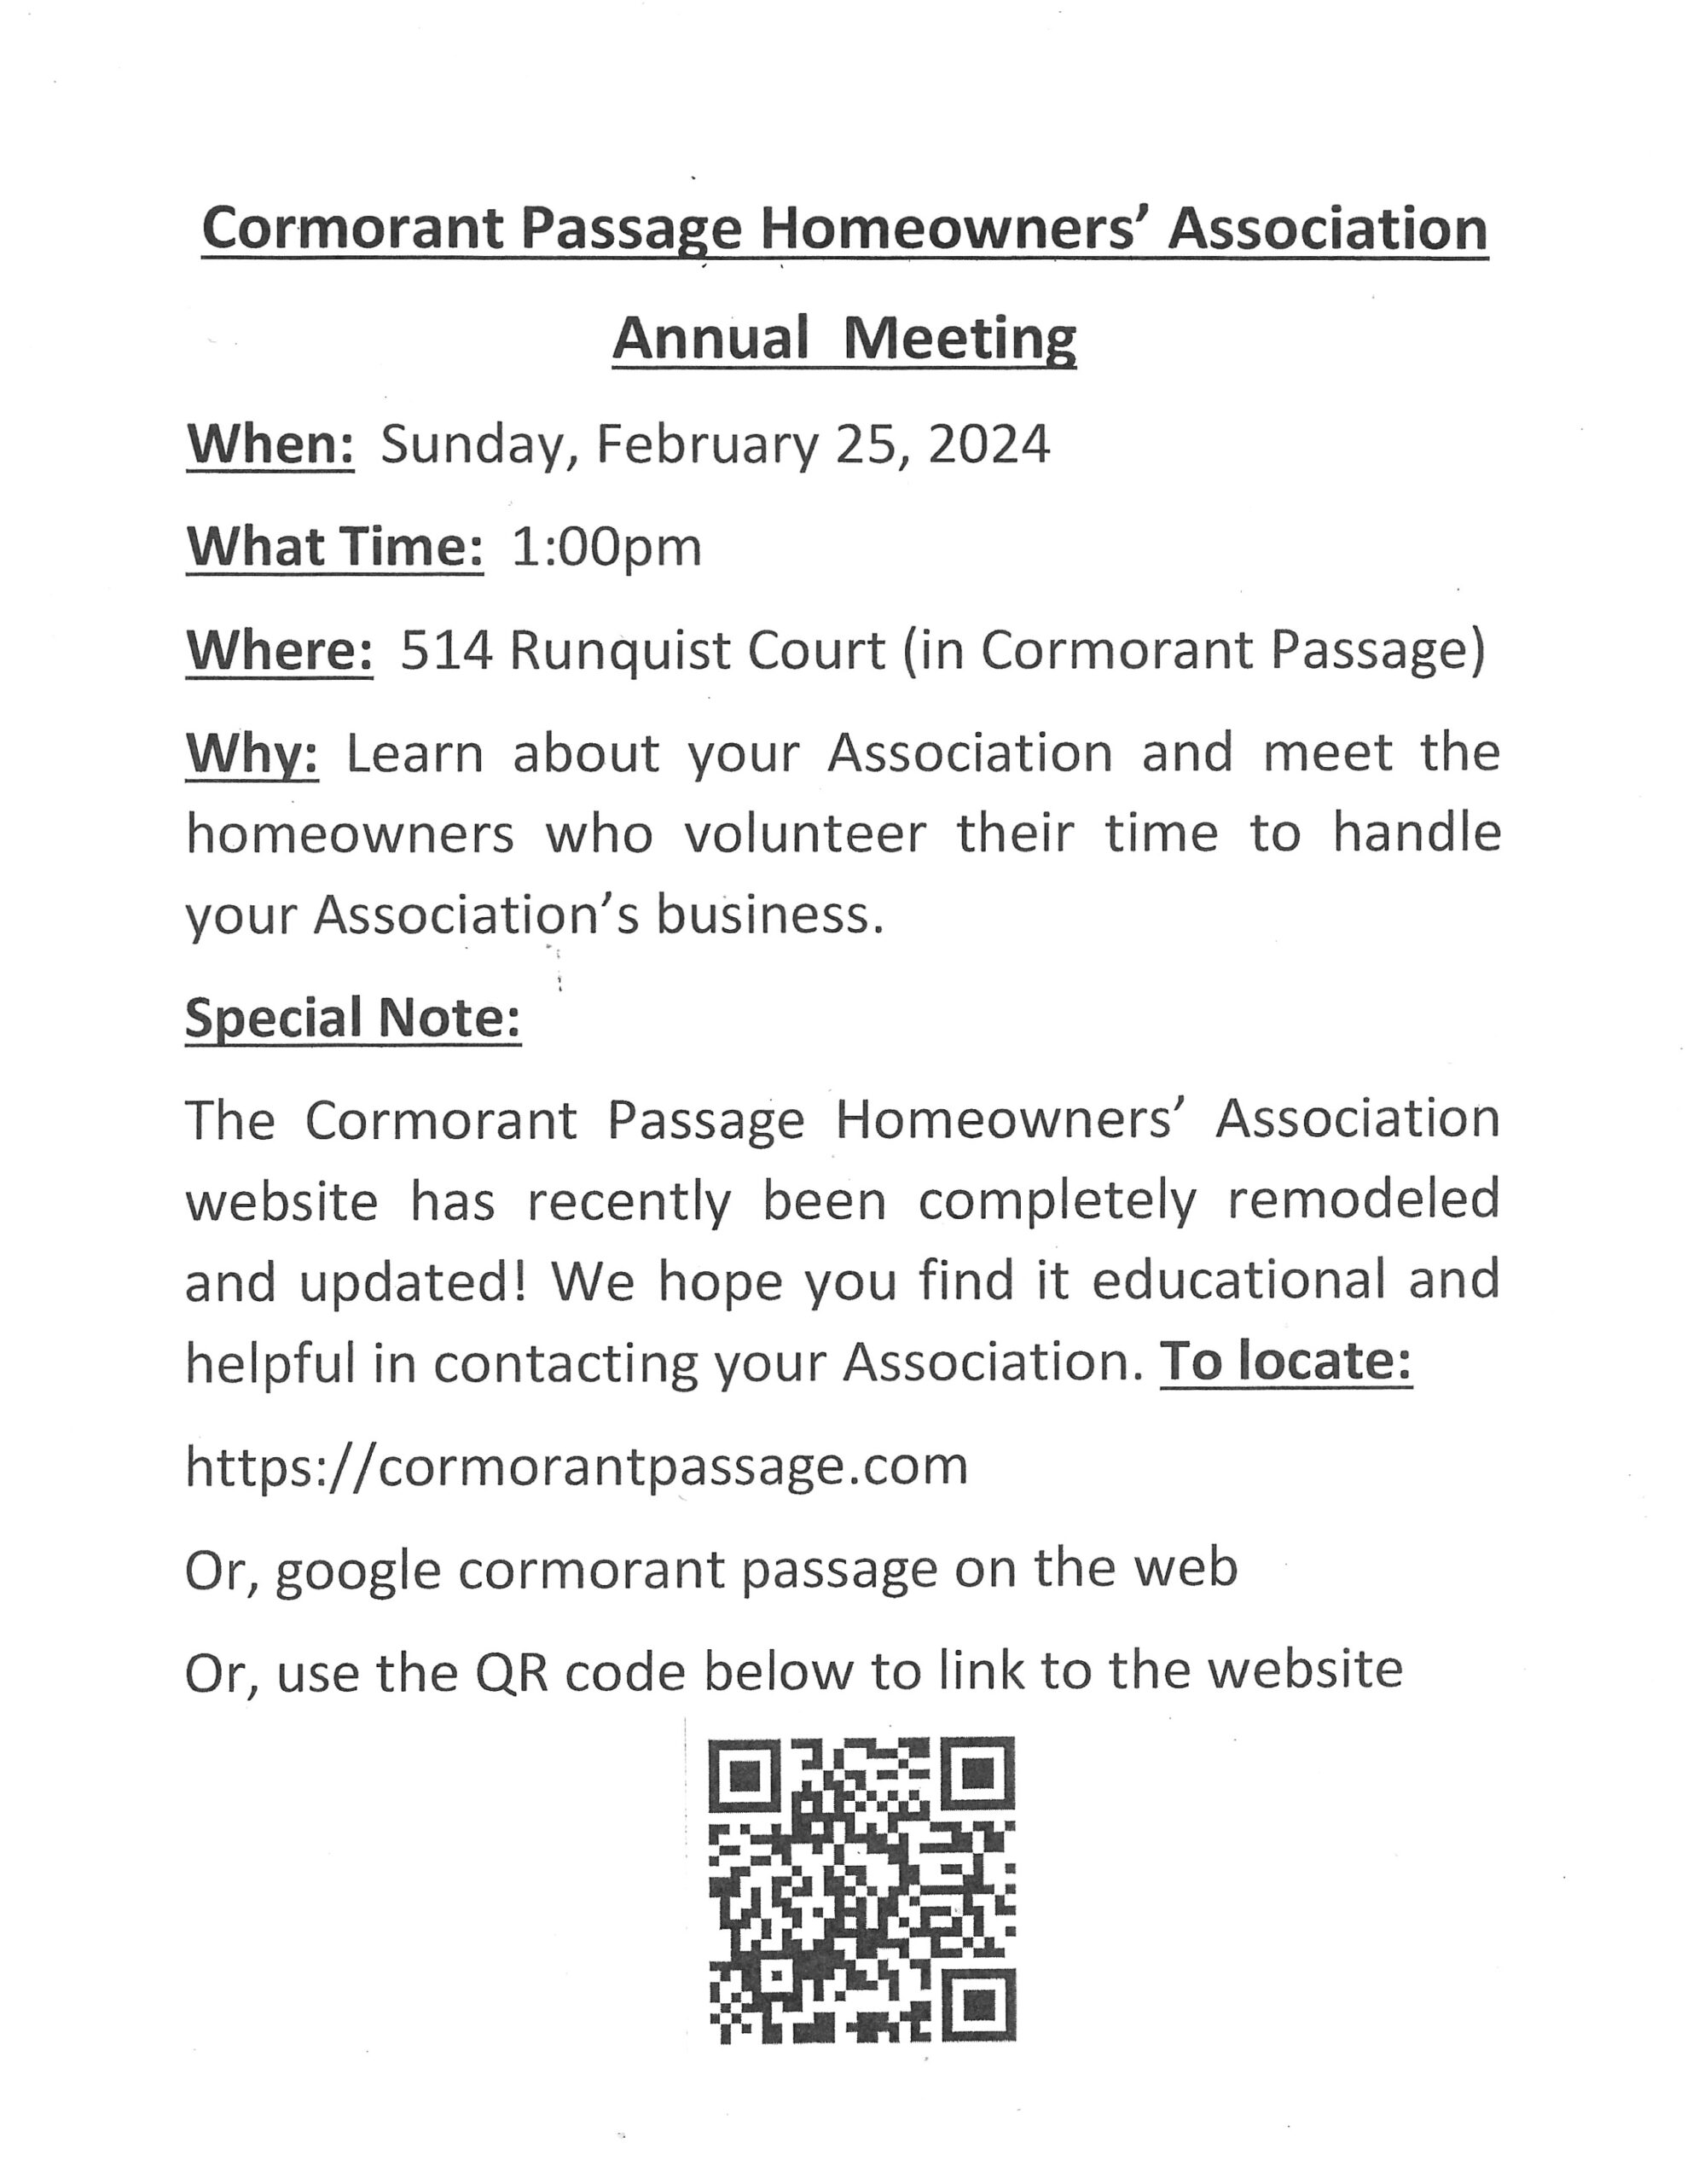 Annual meeting notice 2.28.24